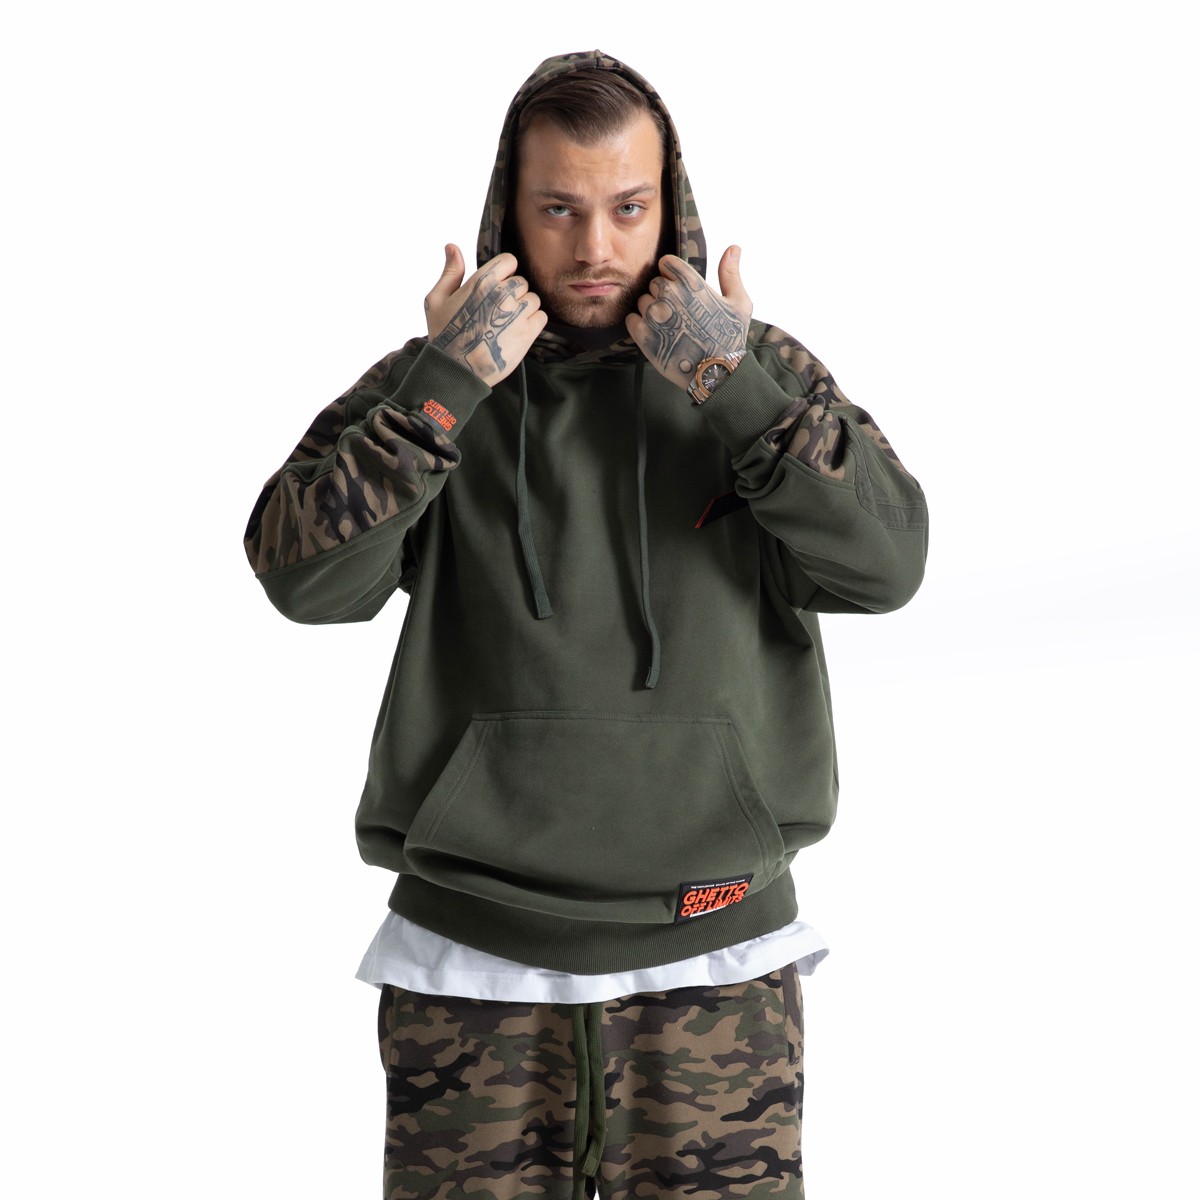 Ghetto Off Limits Street Army Camo Over Size Hoodie Sweatshirt HD-10012